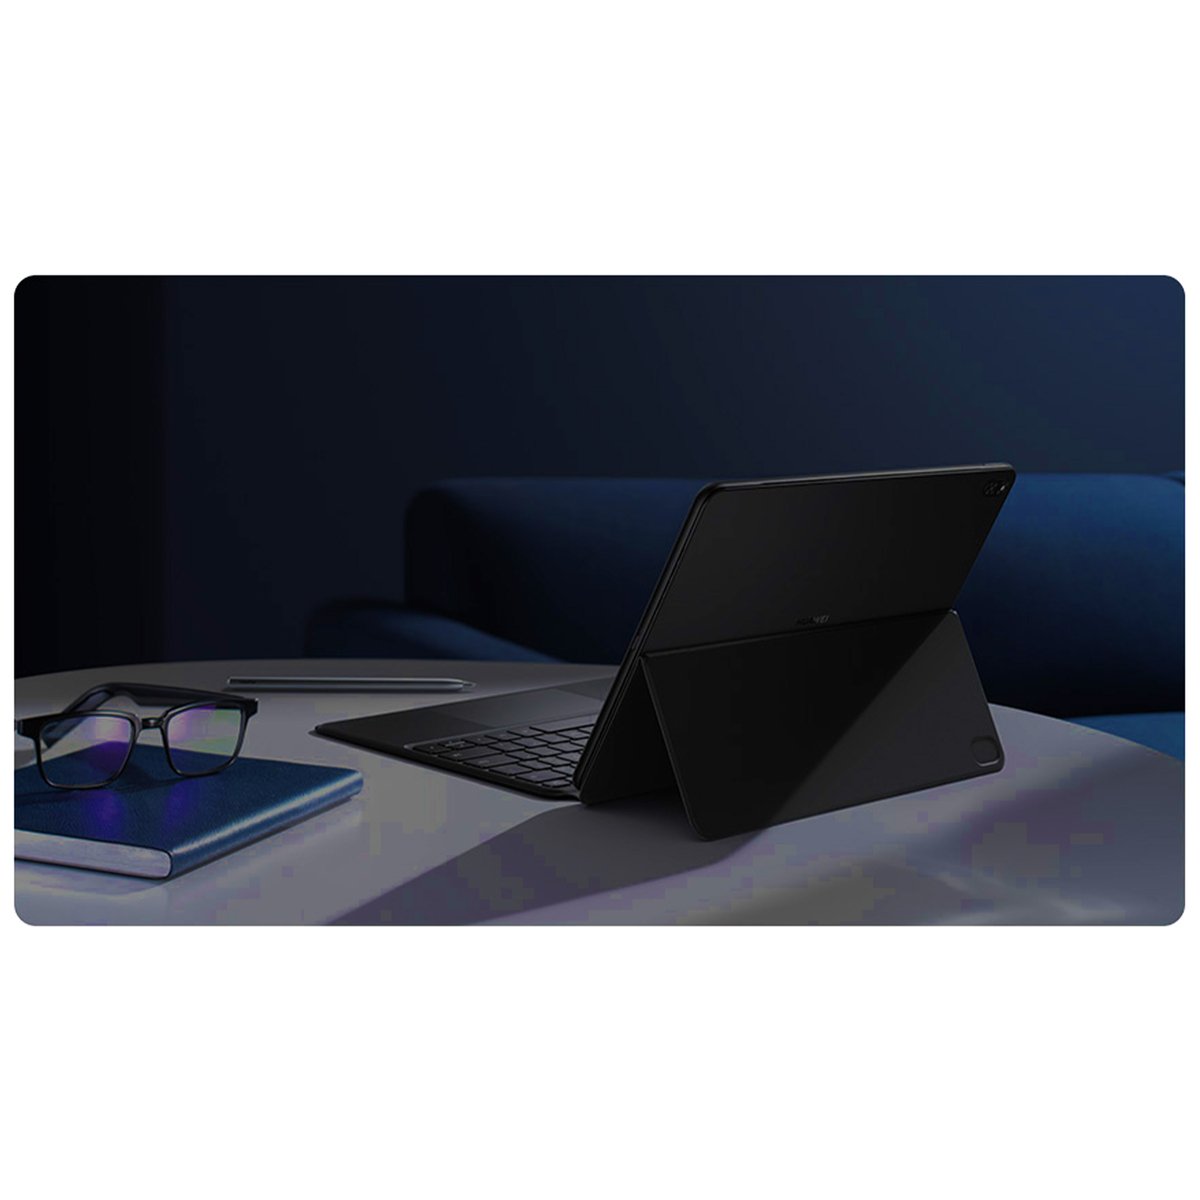 Huawei MateBook E D-W7651TA Convertible 2 in 1 Laptop - 12.6” QHD AMOLED Touch Screen Display, 11th Gen Intel Core i7-1160G7 Processor, 16GB RAM, 512GB SSD, Intel Iris Xe Graphics, Nebula Grey